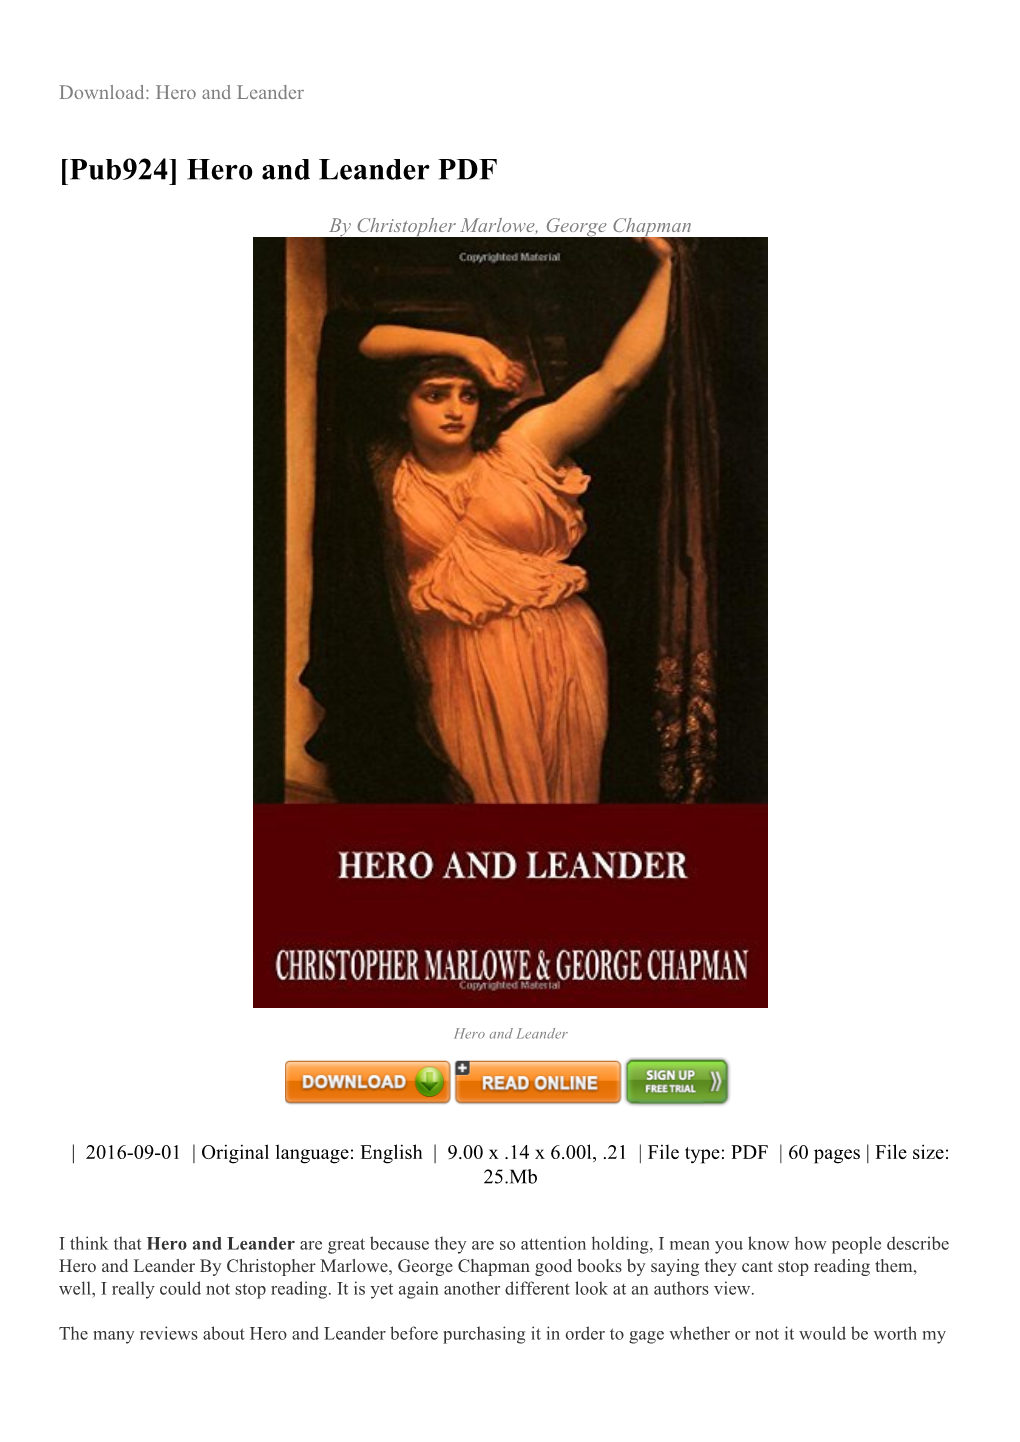 Download Hero and Leander